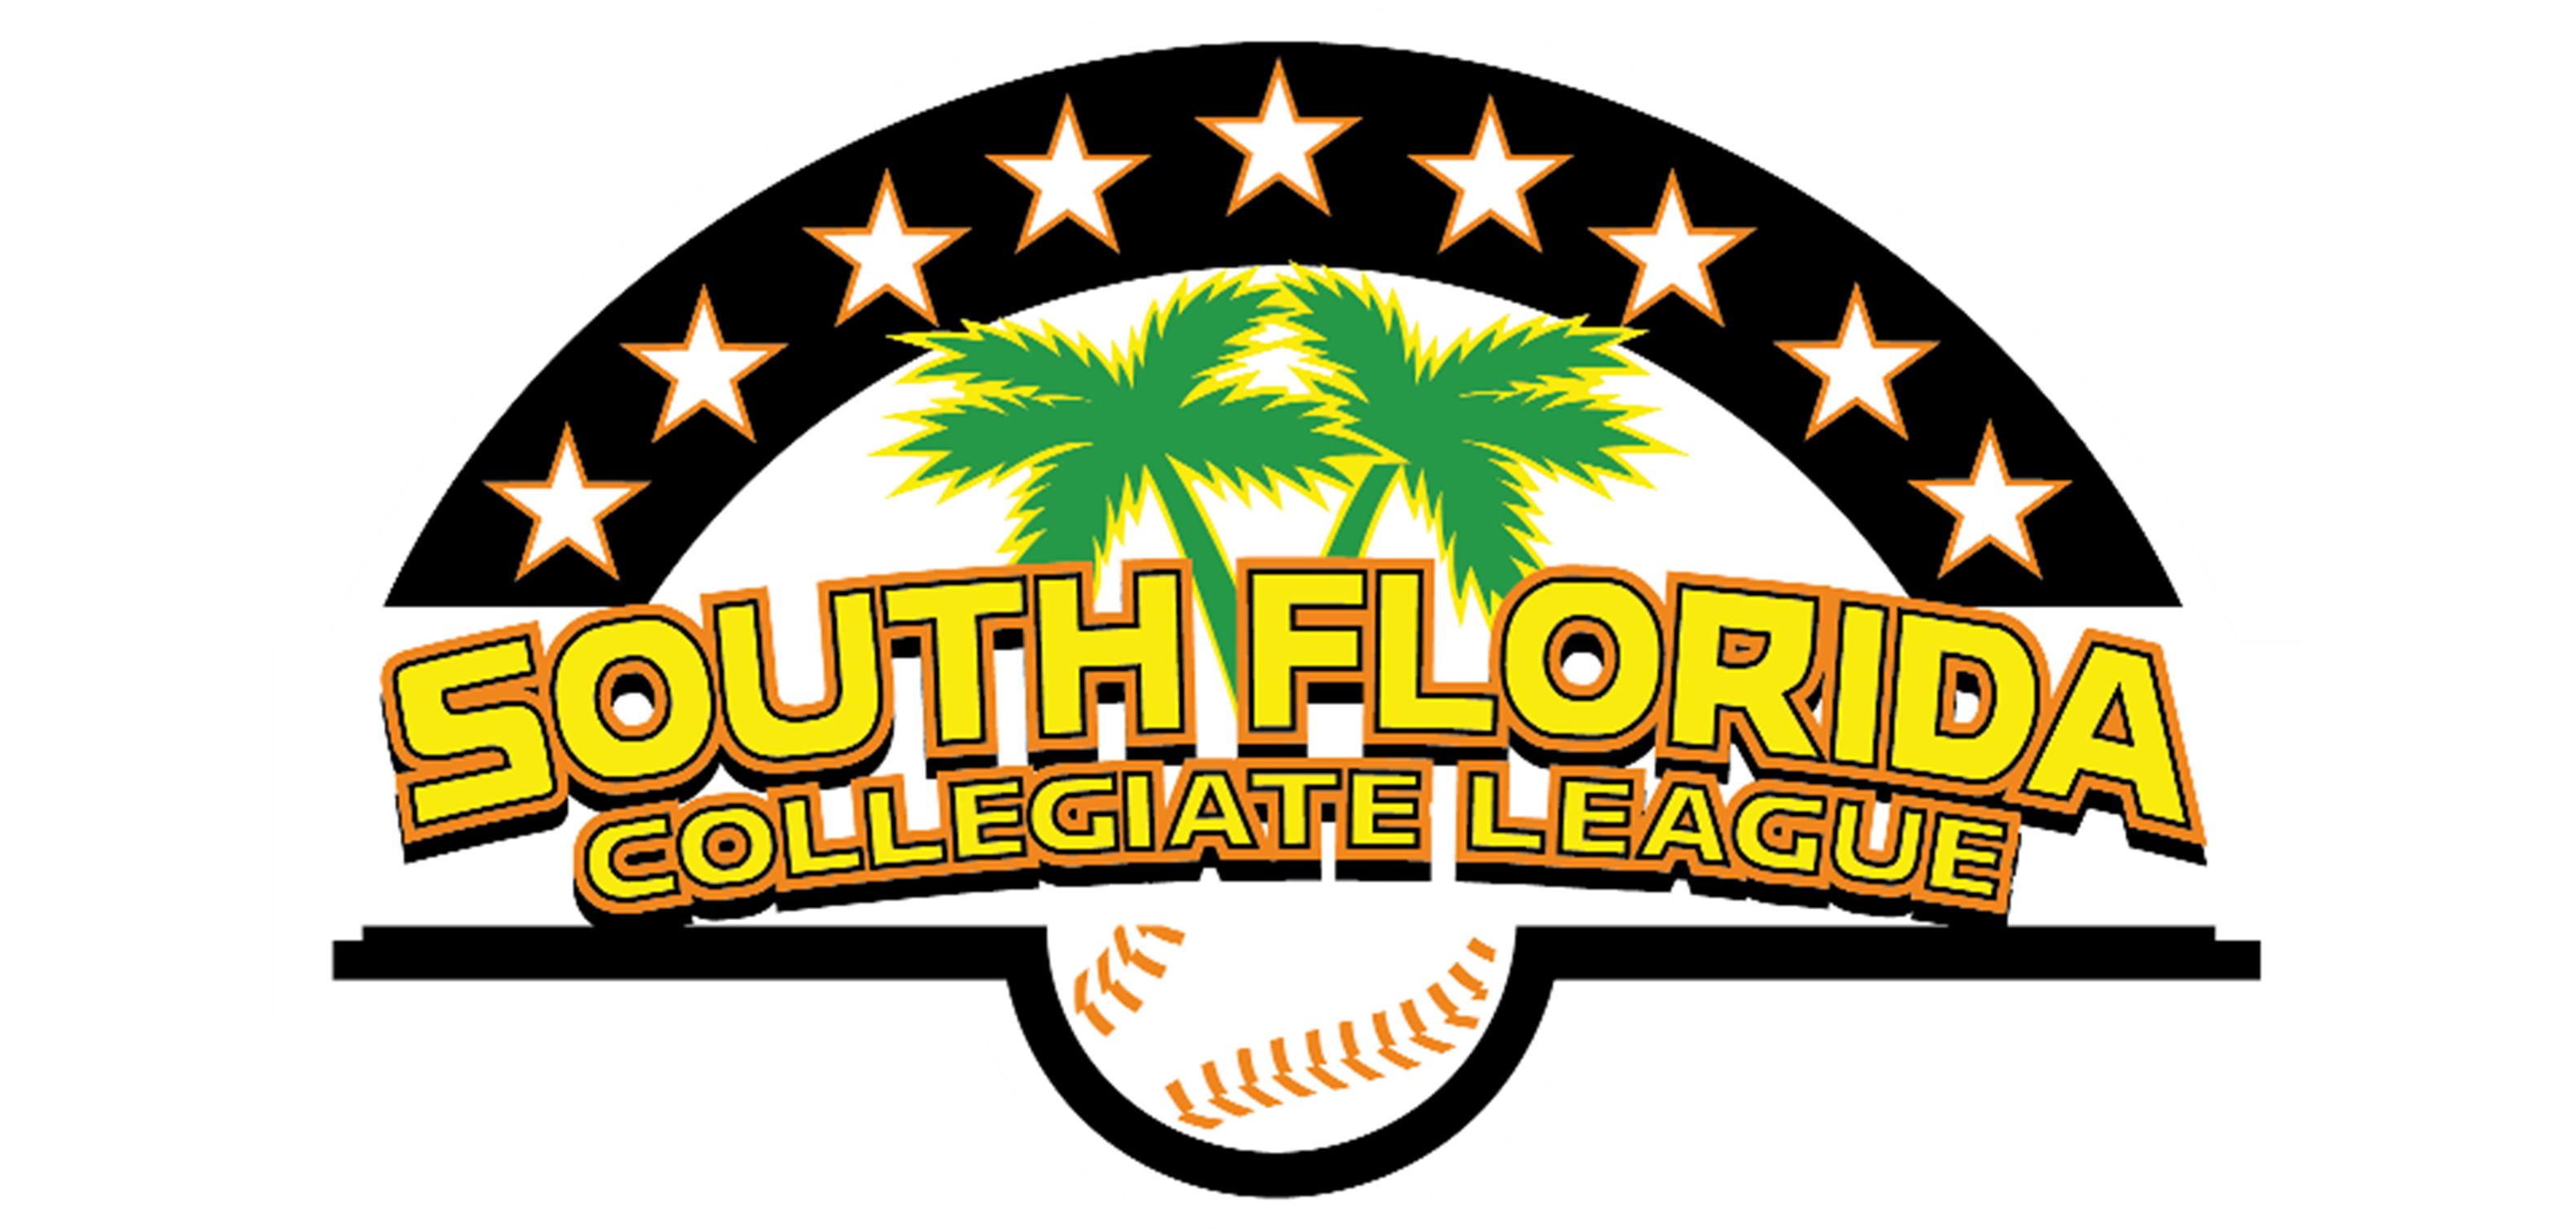 South Florida Collegiate League Logo